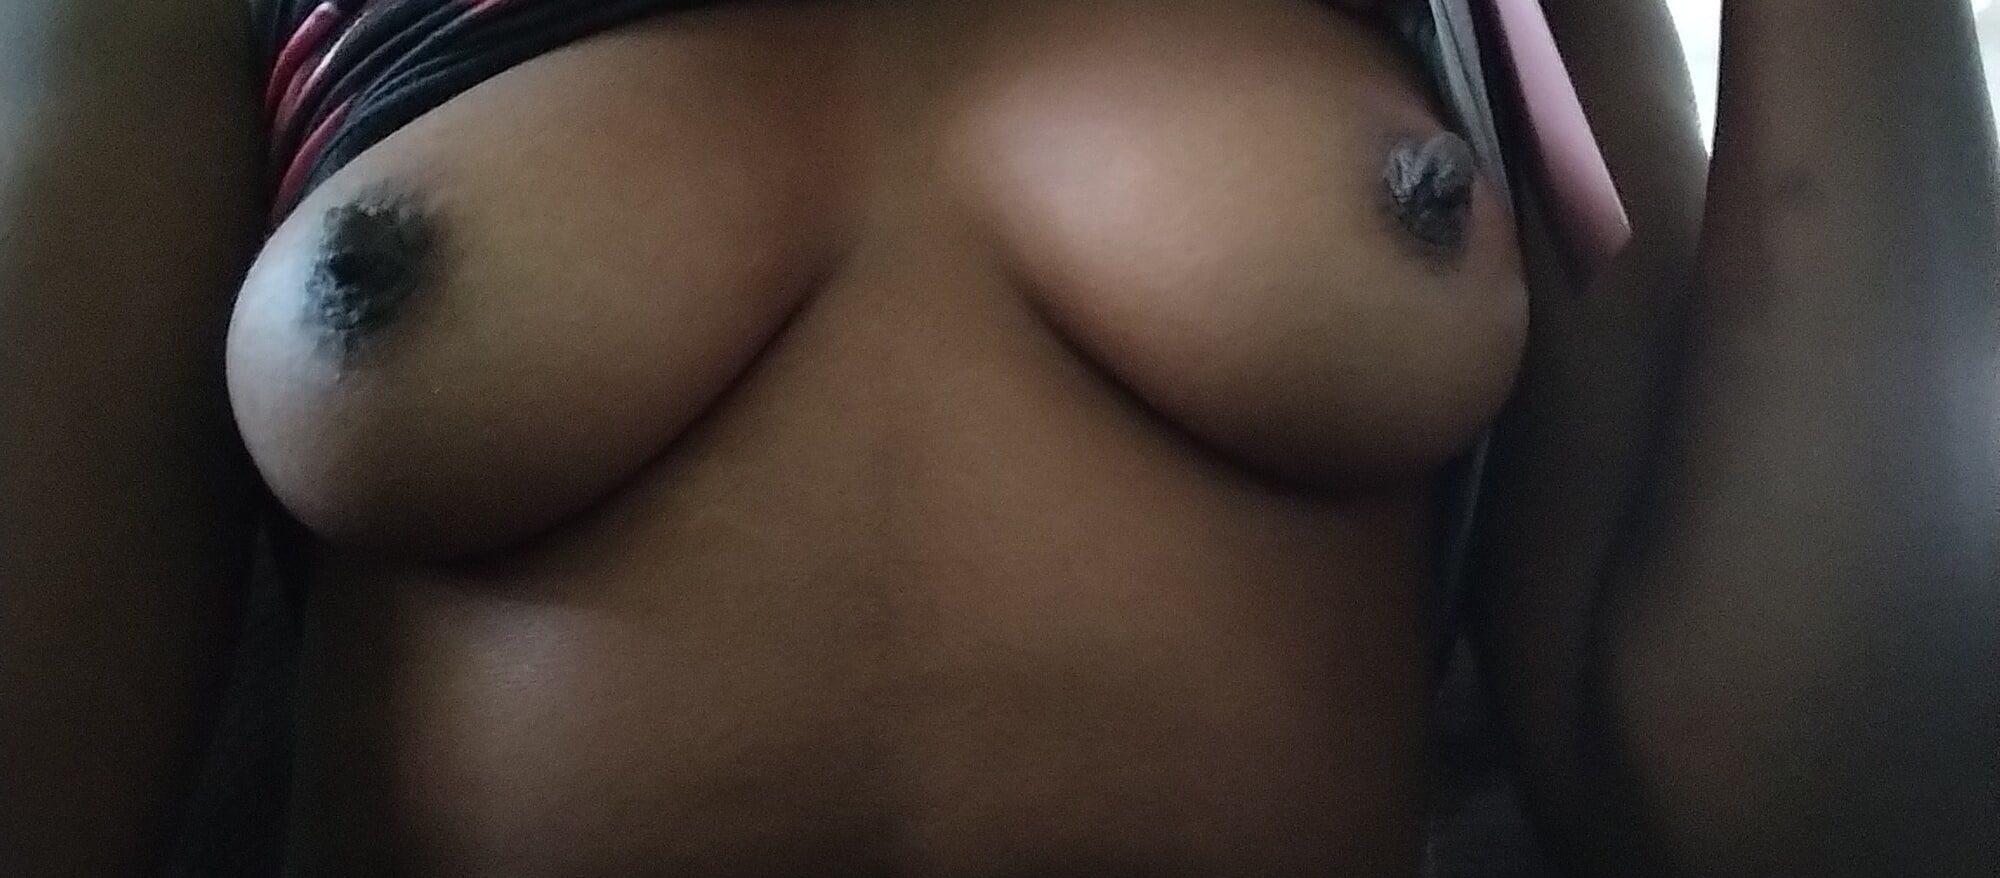 Small tits